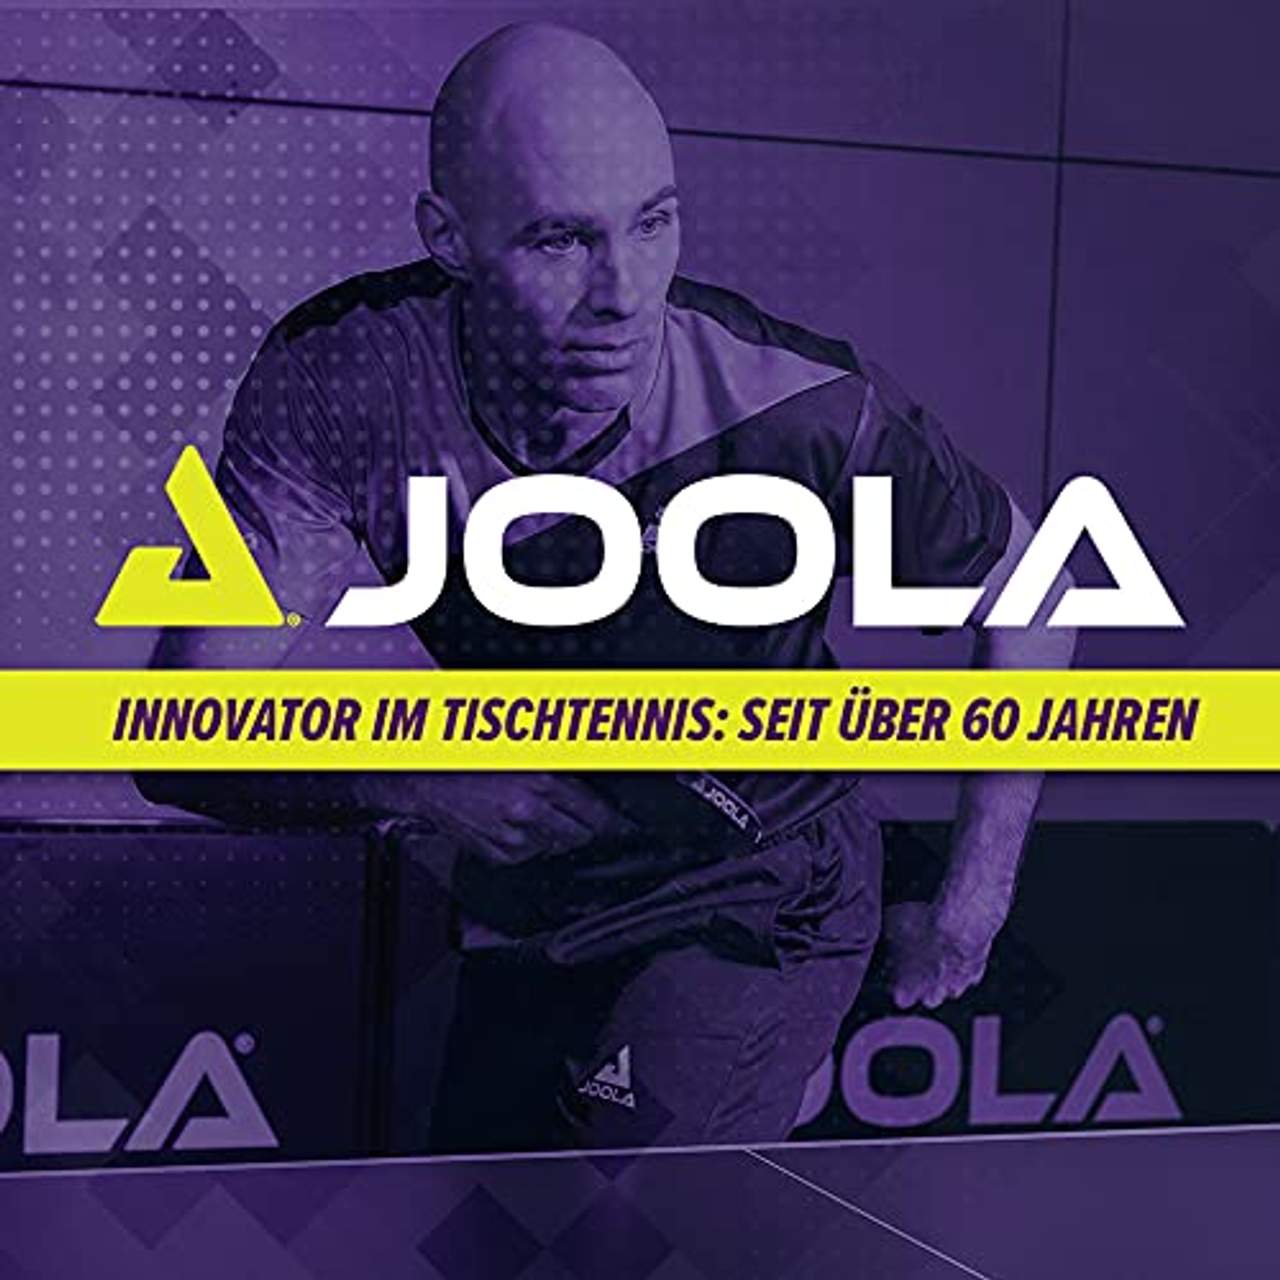 JOOLA TT Mega Carbon Ittf zugelassener Tischtennis-Schläger